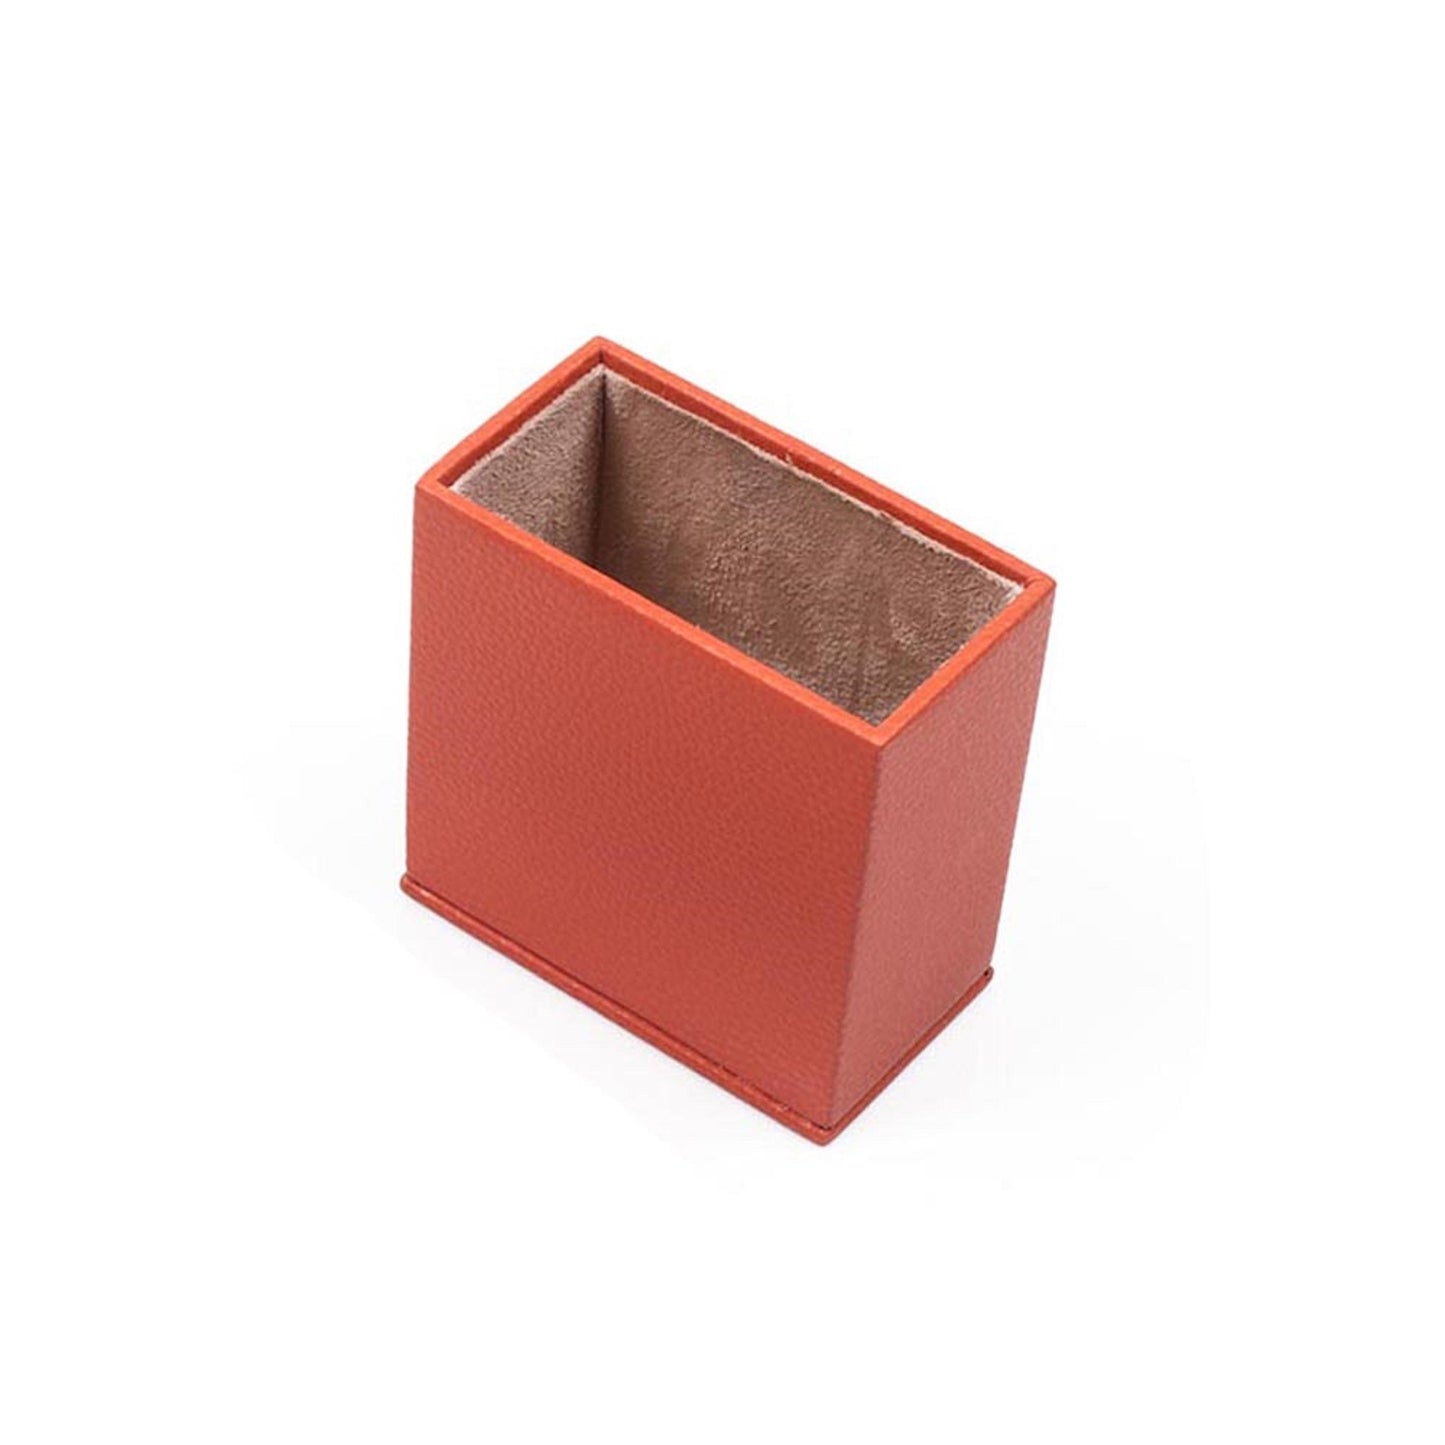 MOOG Leather Desk Set-3 Accessories-Single Document Tray - Orange - 3 PCS